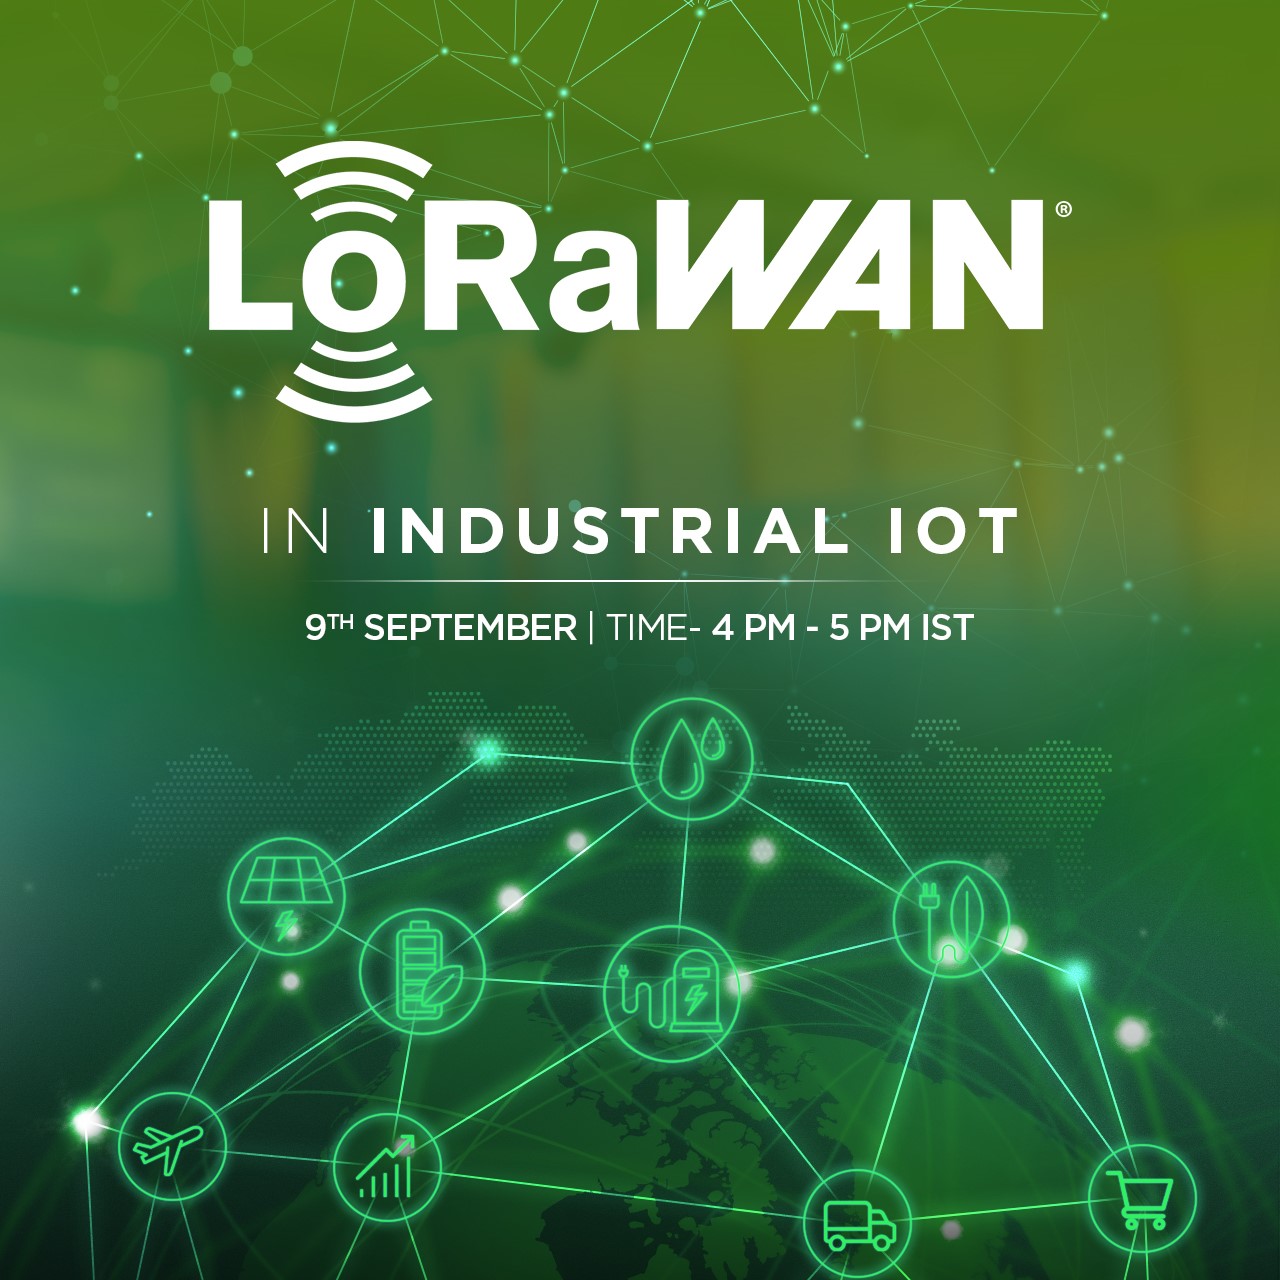 Webinar on "LoRaWAN® in Industrial IoT", New Delhi, Delhi, India